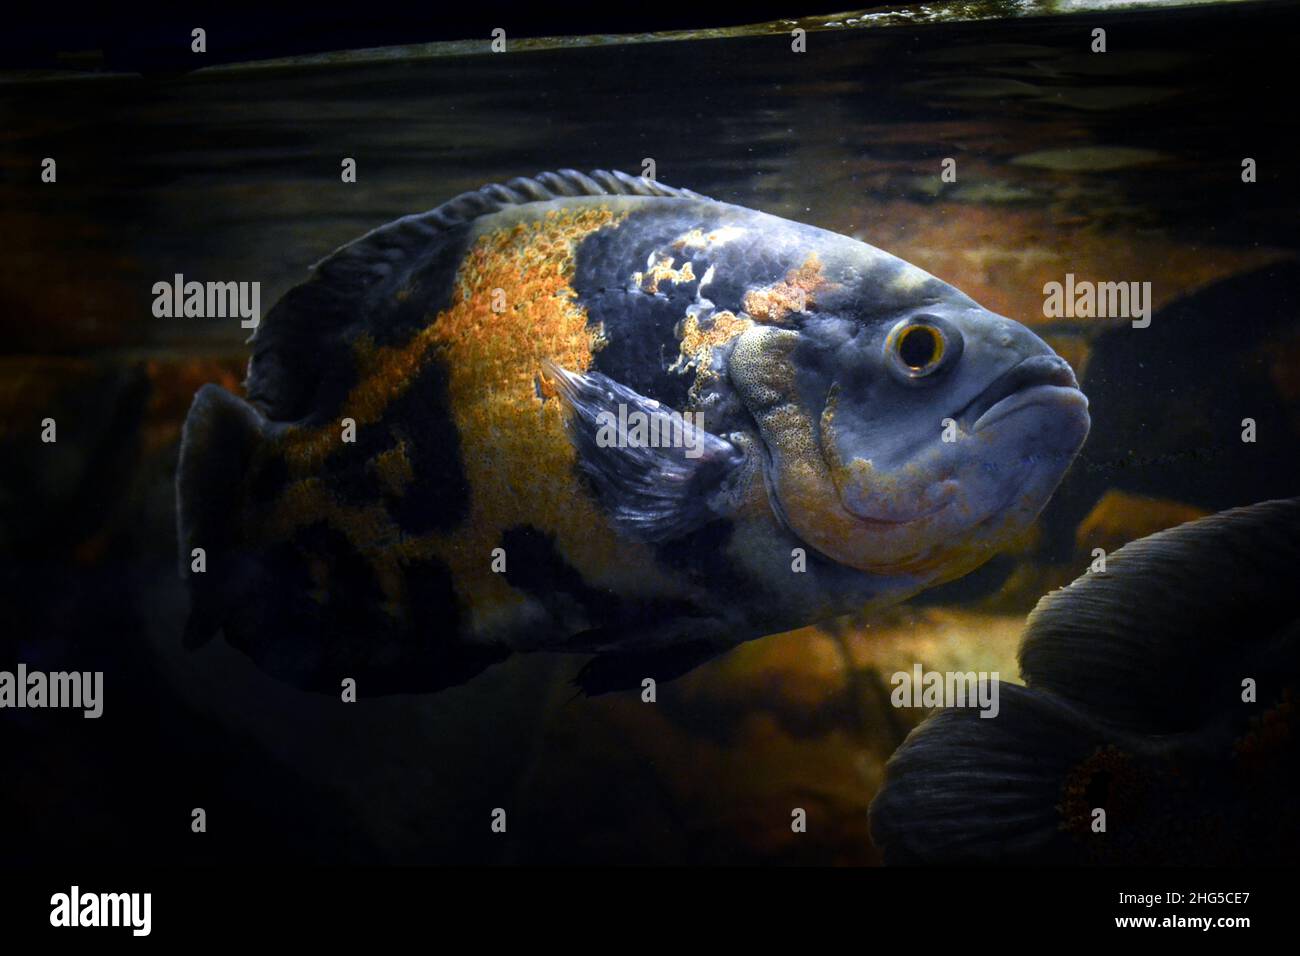 Astronotus ocellatus fish swimming underwater Stock Photo